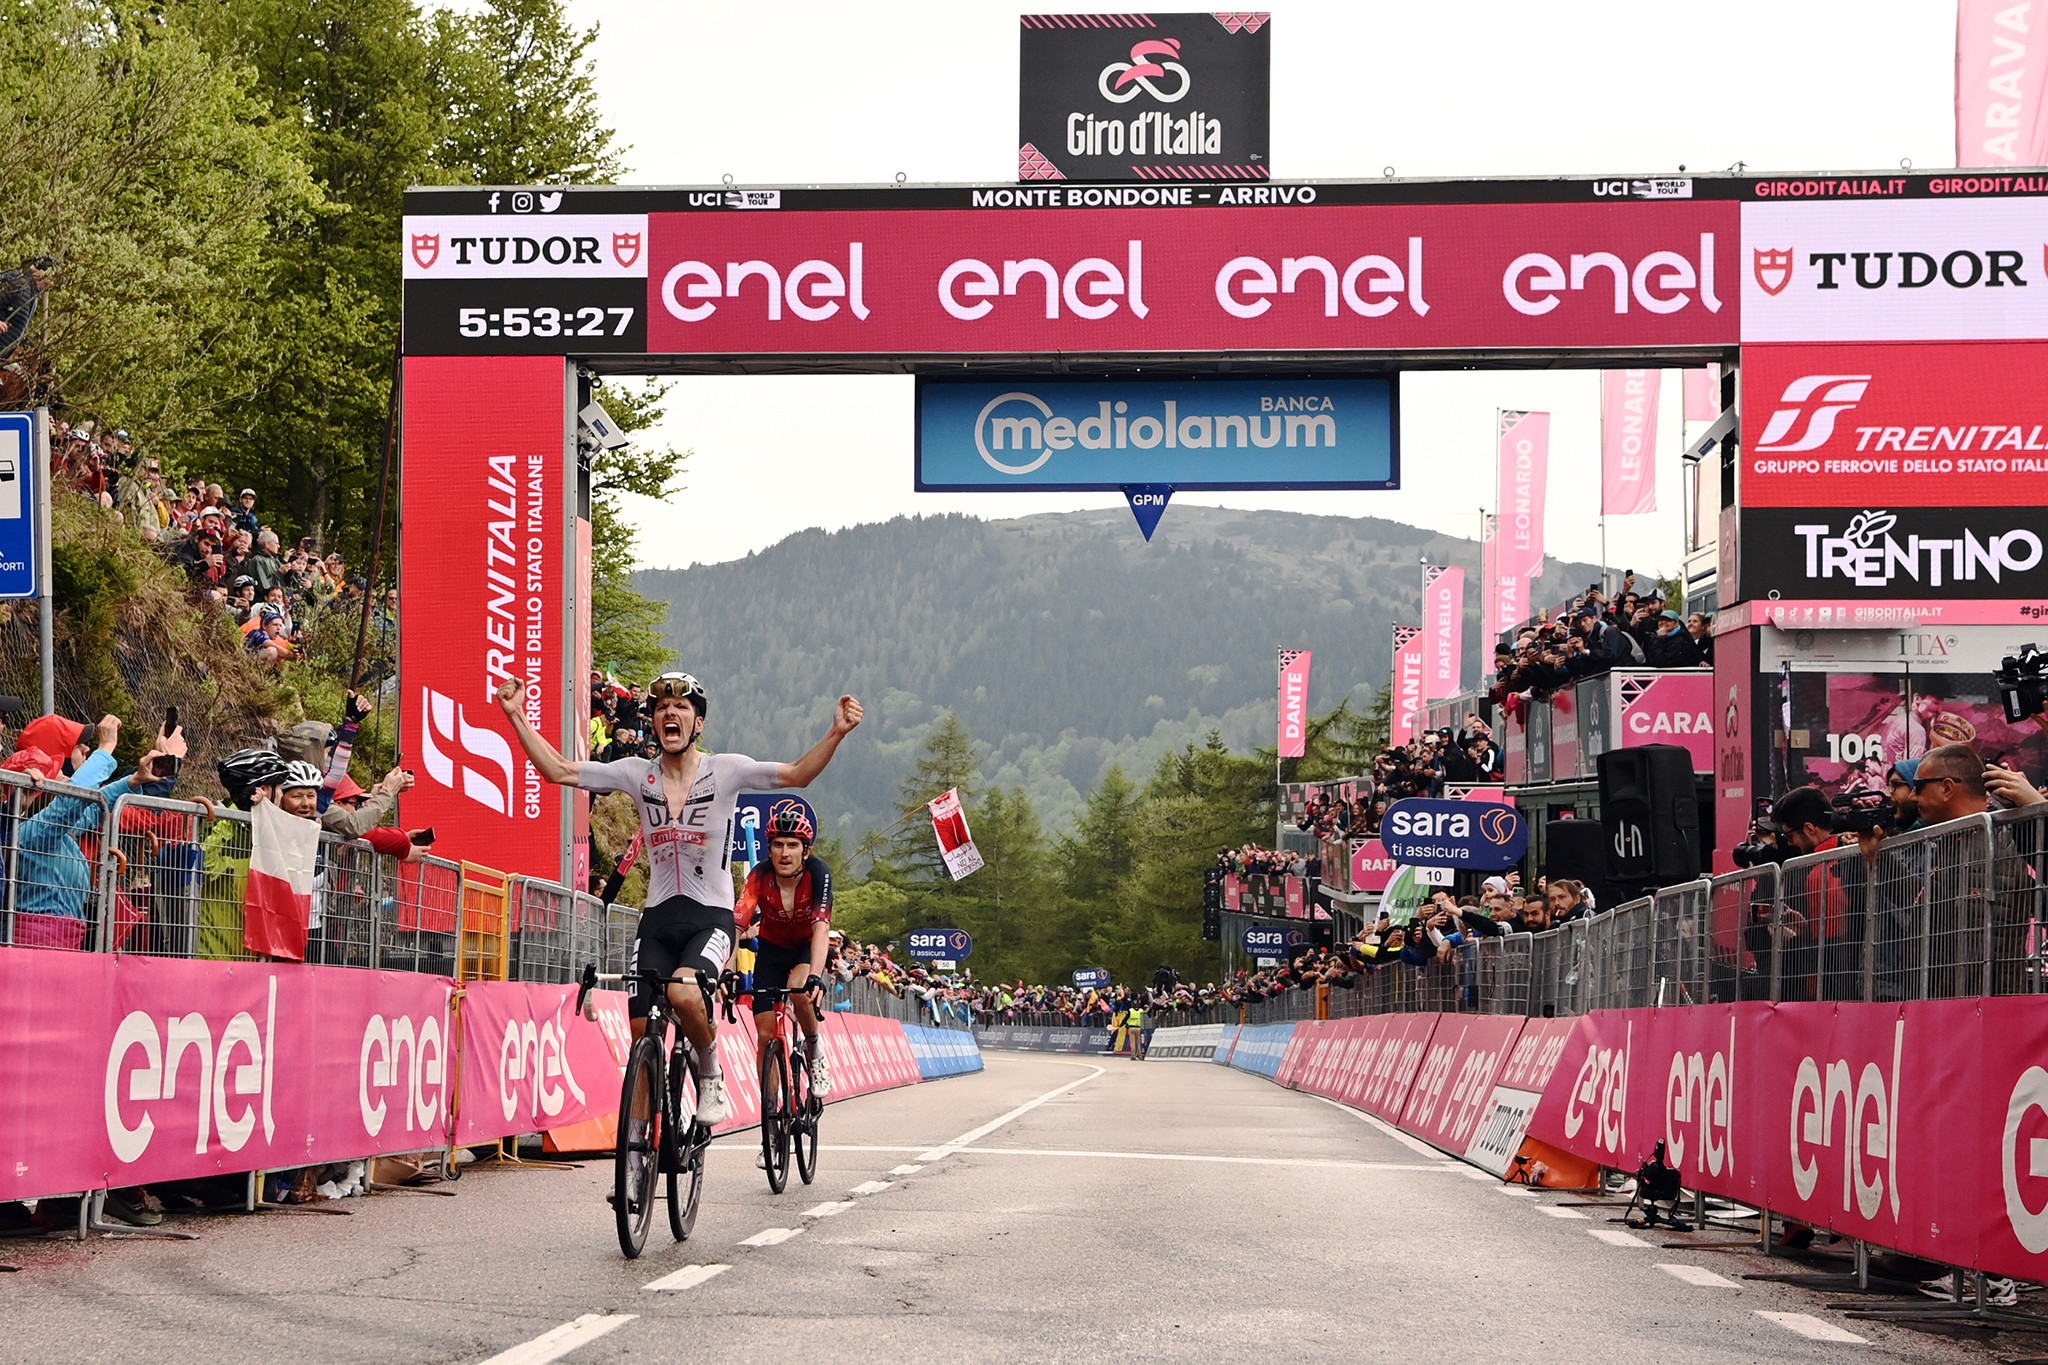 João Almeida, in white, celebrates after winning stage 16 of the Giro d'Italia on top of the Monte Bondone ©La Presse